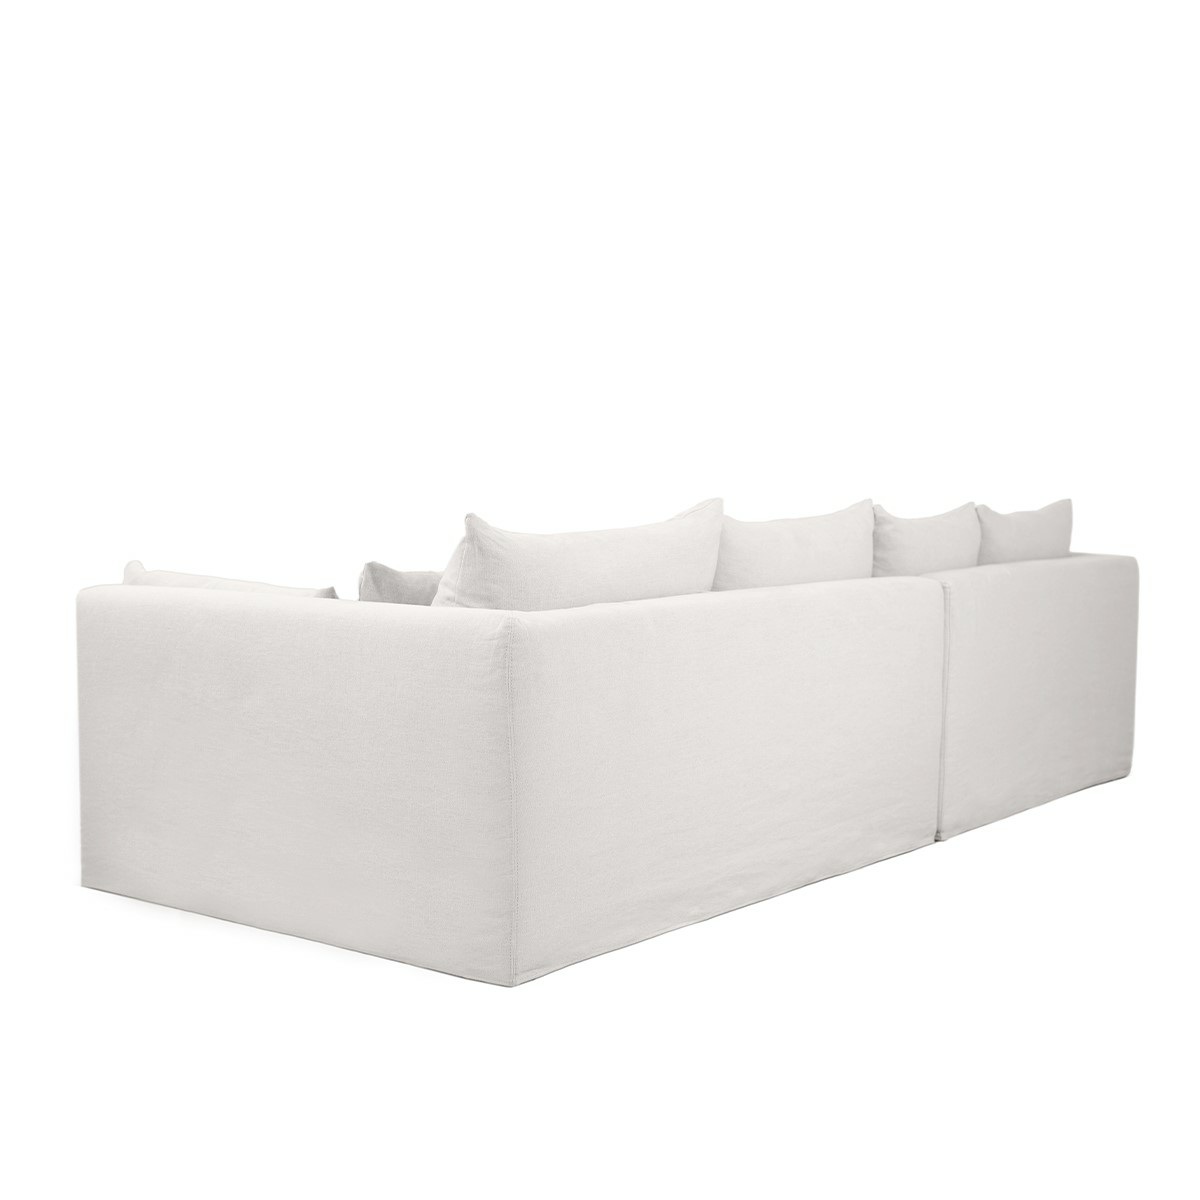 SuperBox corner sofa - Left angle, Various Sizes - Linen - image 4